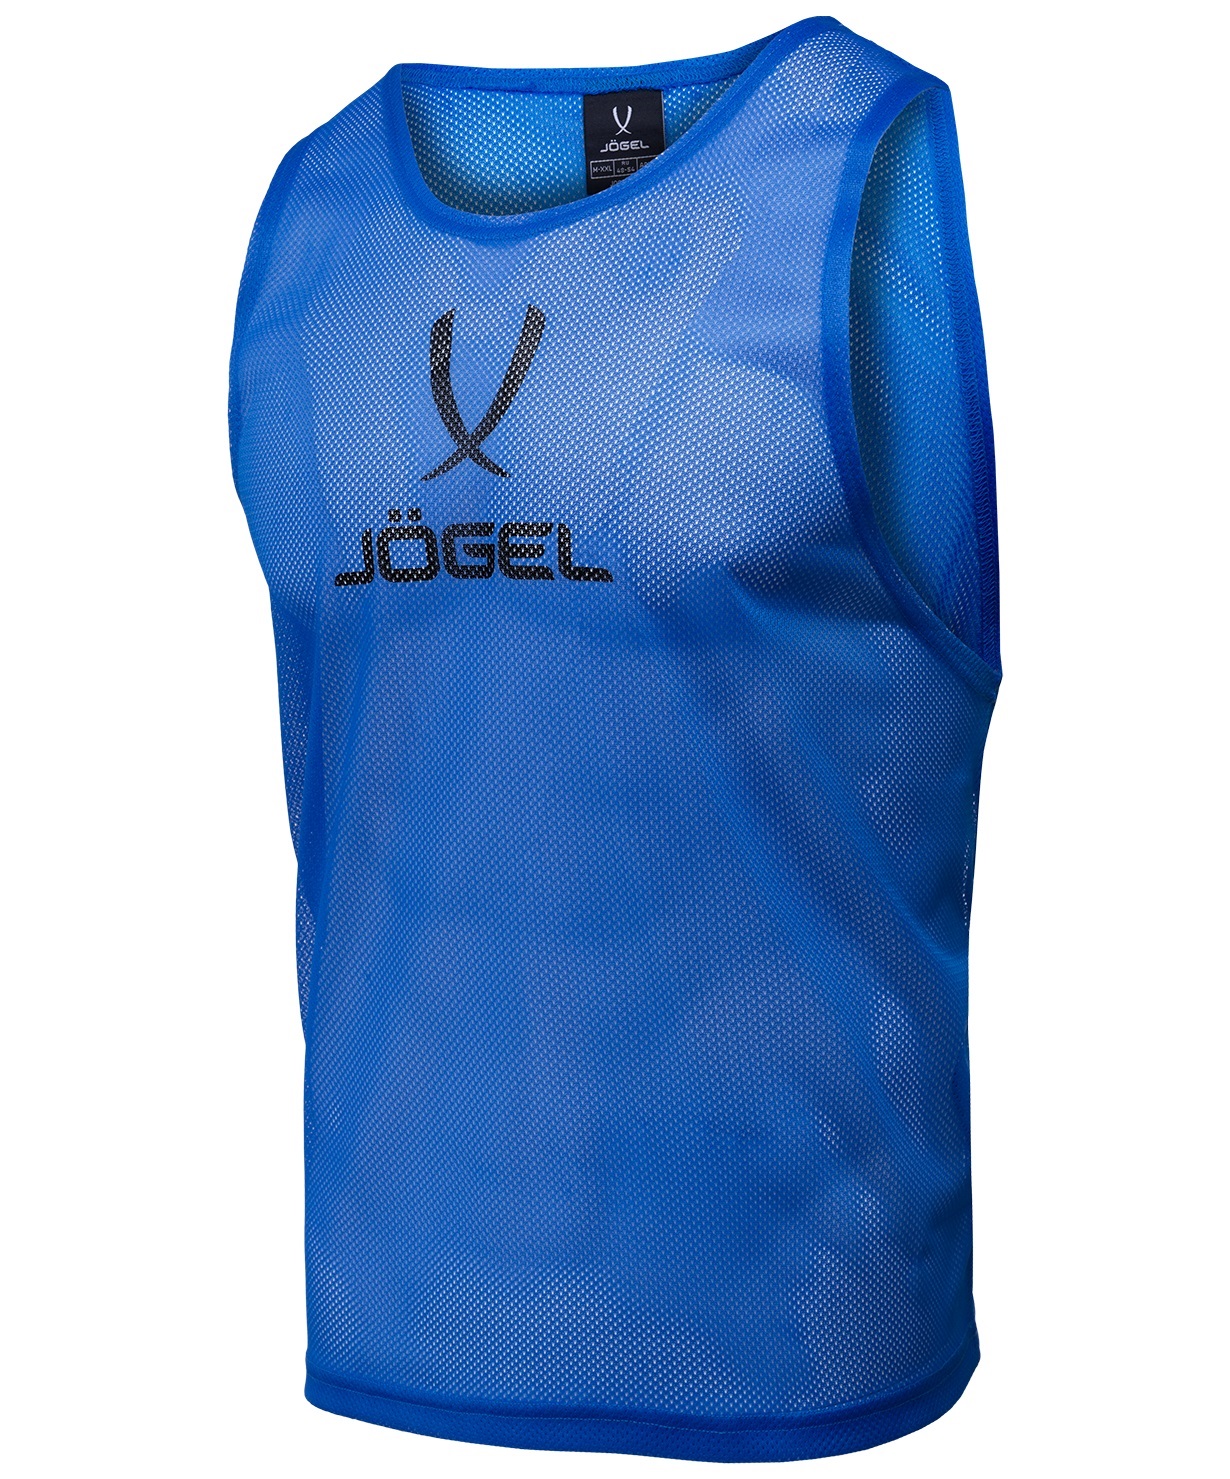 Манишка Jogel Training Bib сетчатая, синий, размер S, 1 шт.